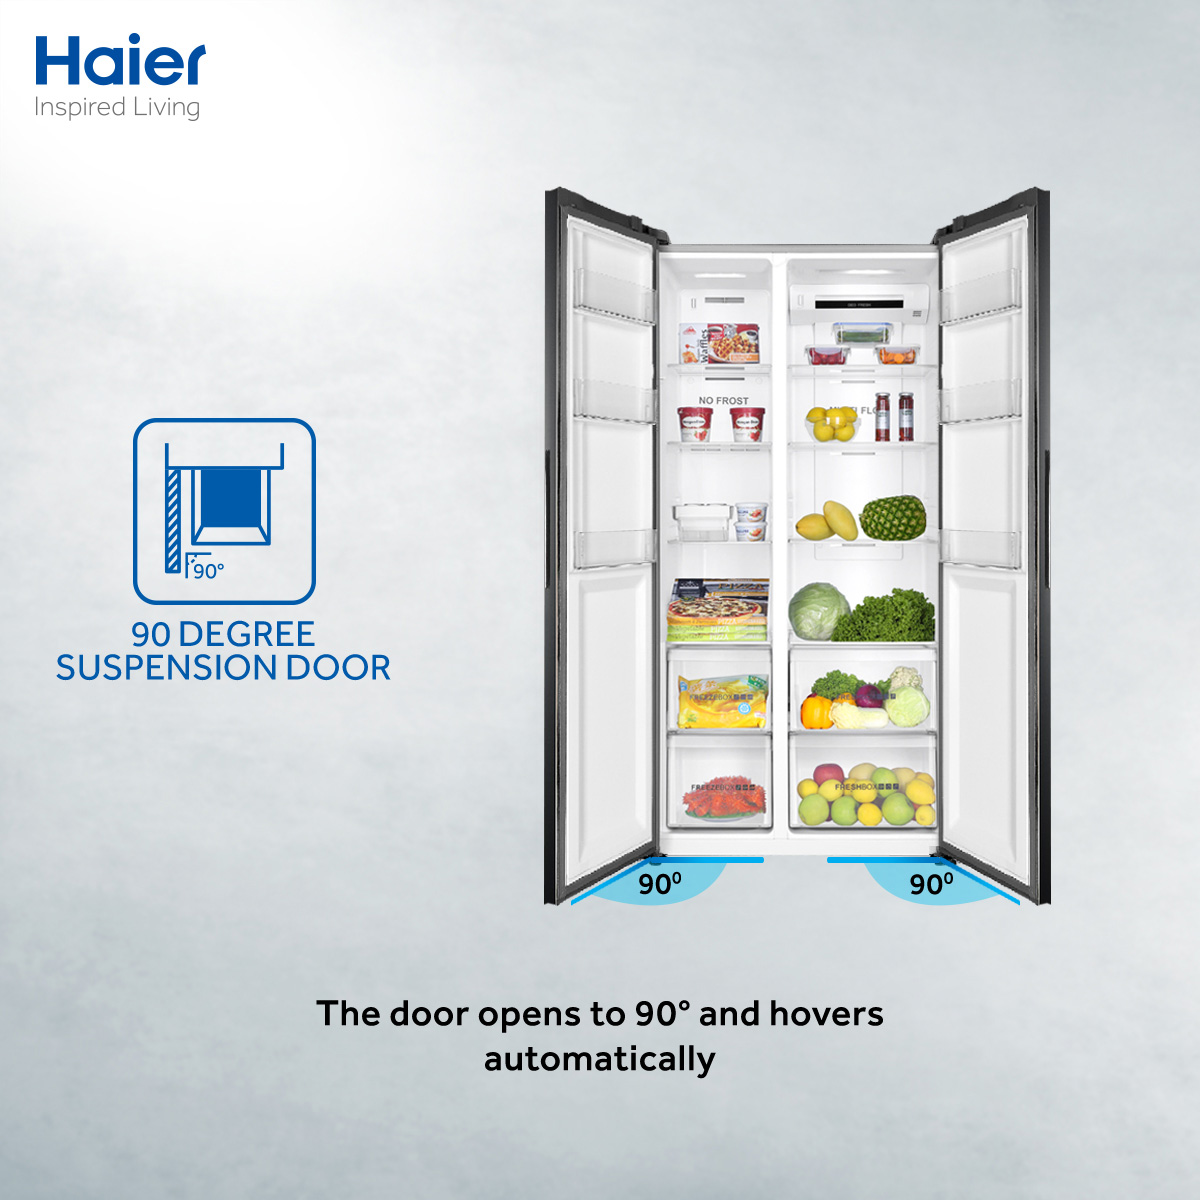 09-Abid-Market-Haier-Products-Side-by-Side-Digital-Inverter-Refrigerator-DL-01-09